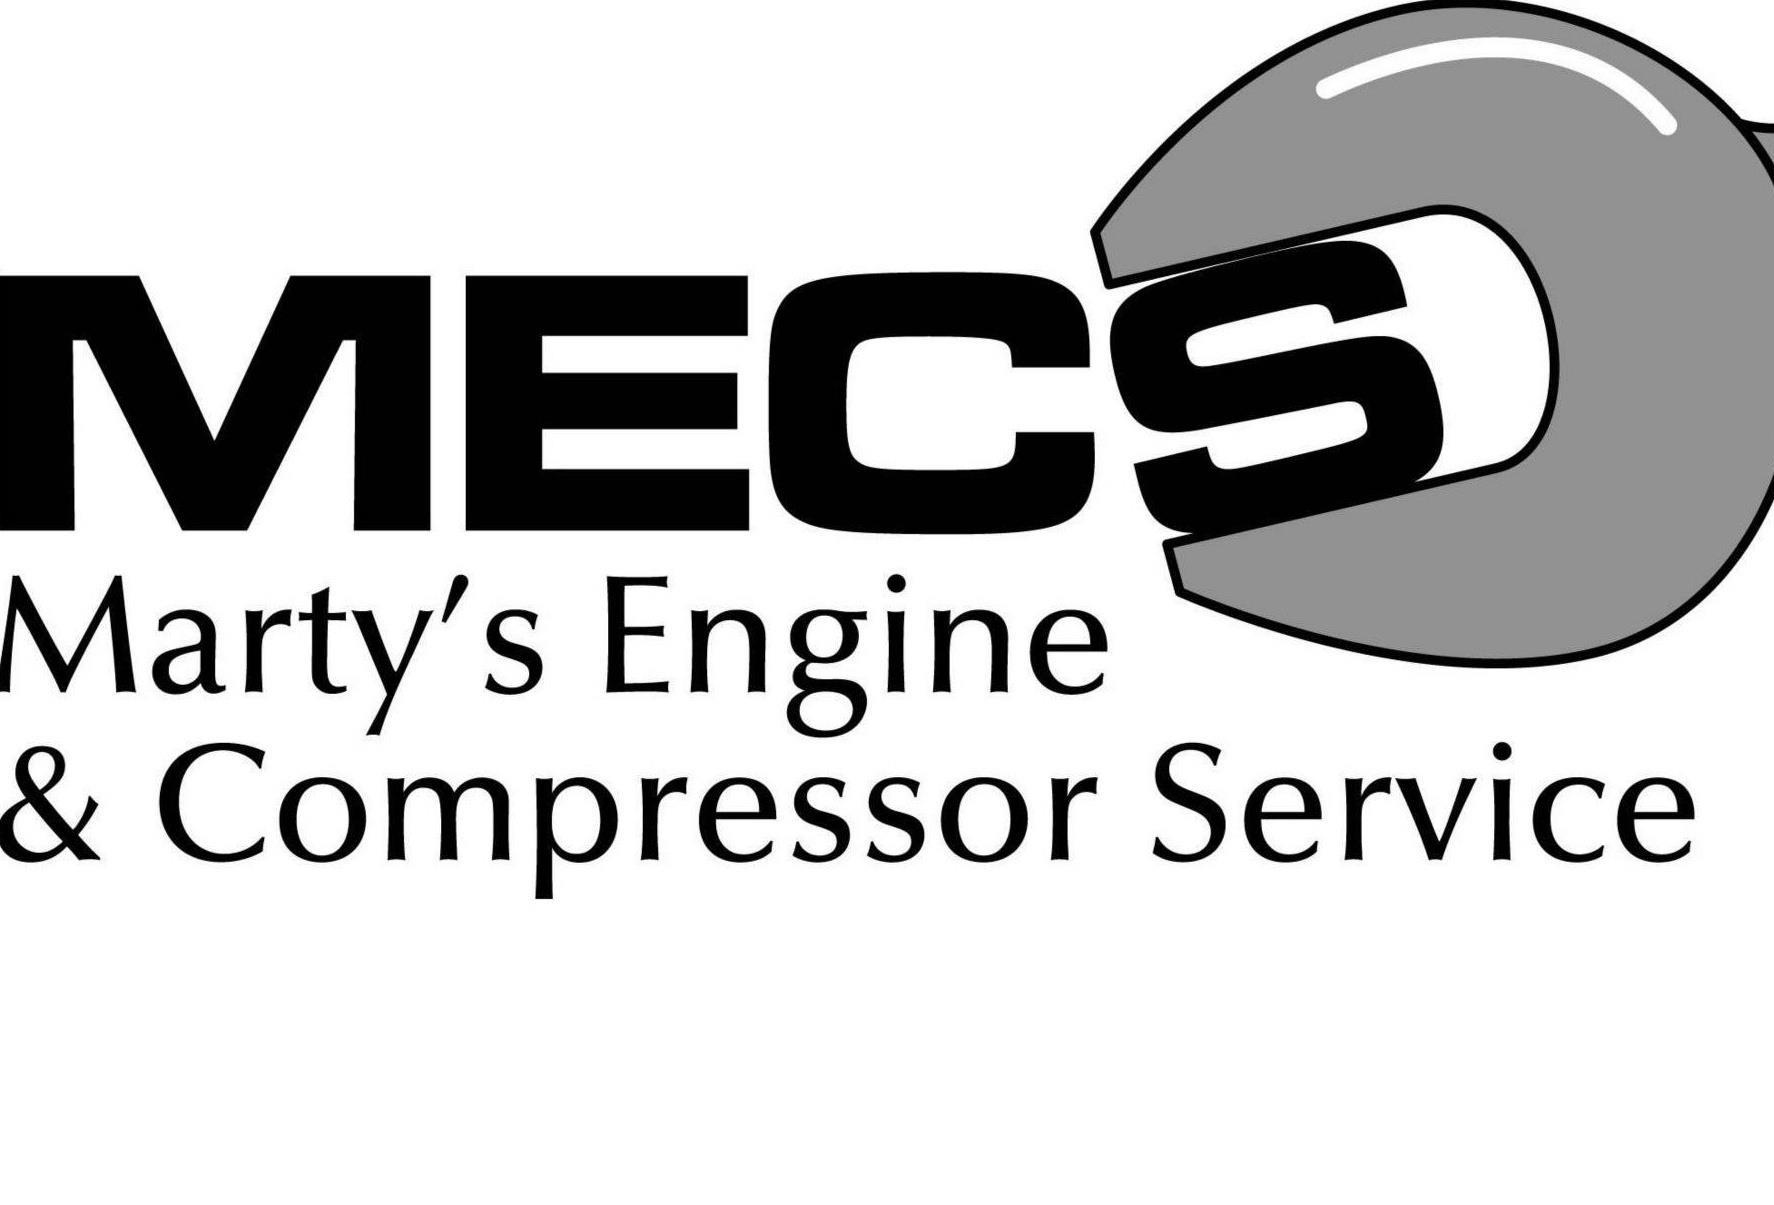 Marty's Engine & Compressor Service Ltd logo